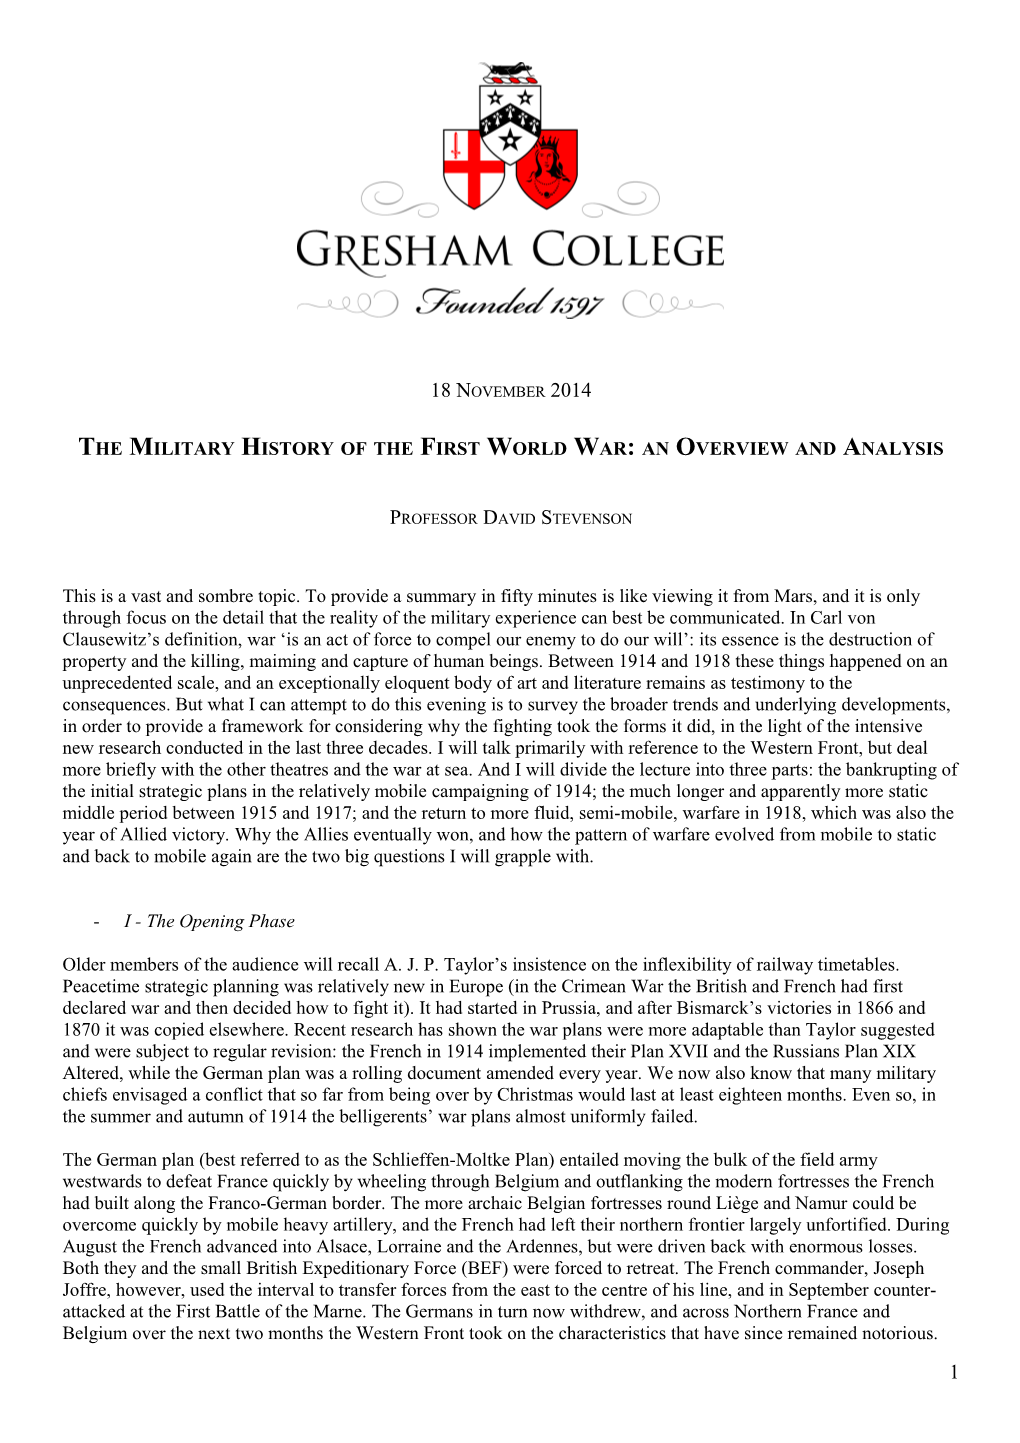 Gresham College Lecture, 18 November 2014